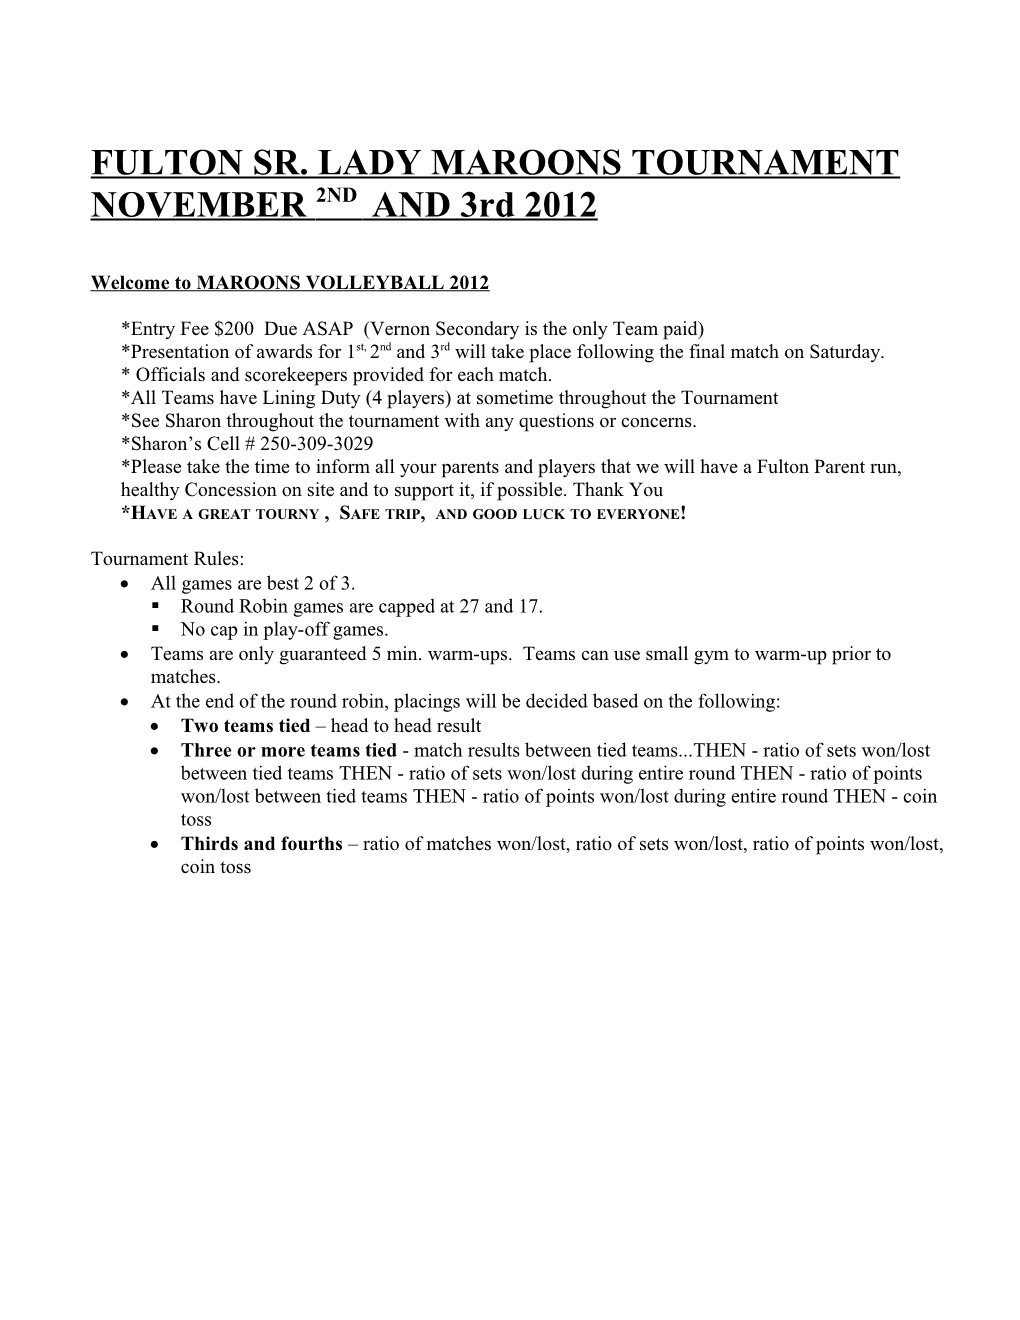 Fulton Sr. Lady Maroons Tournament